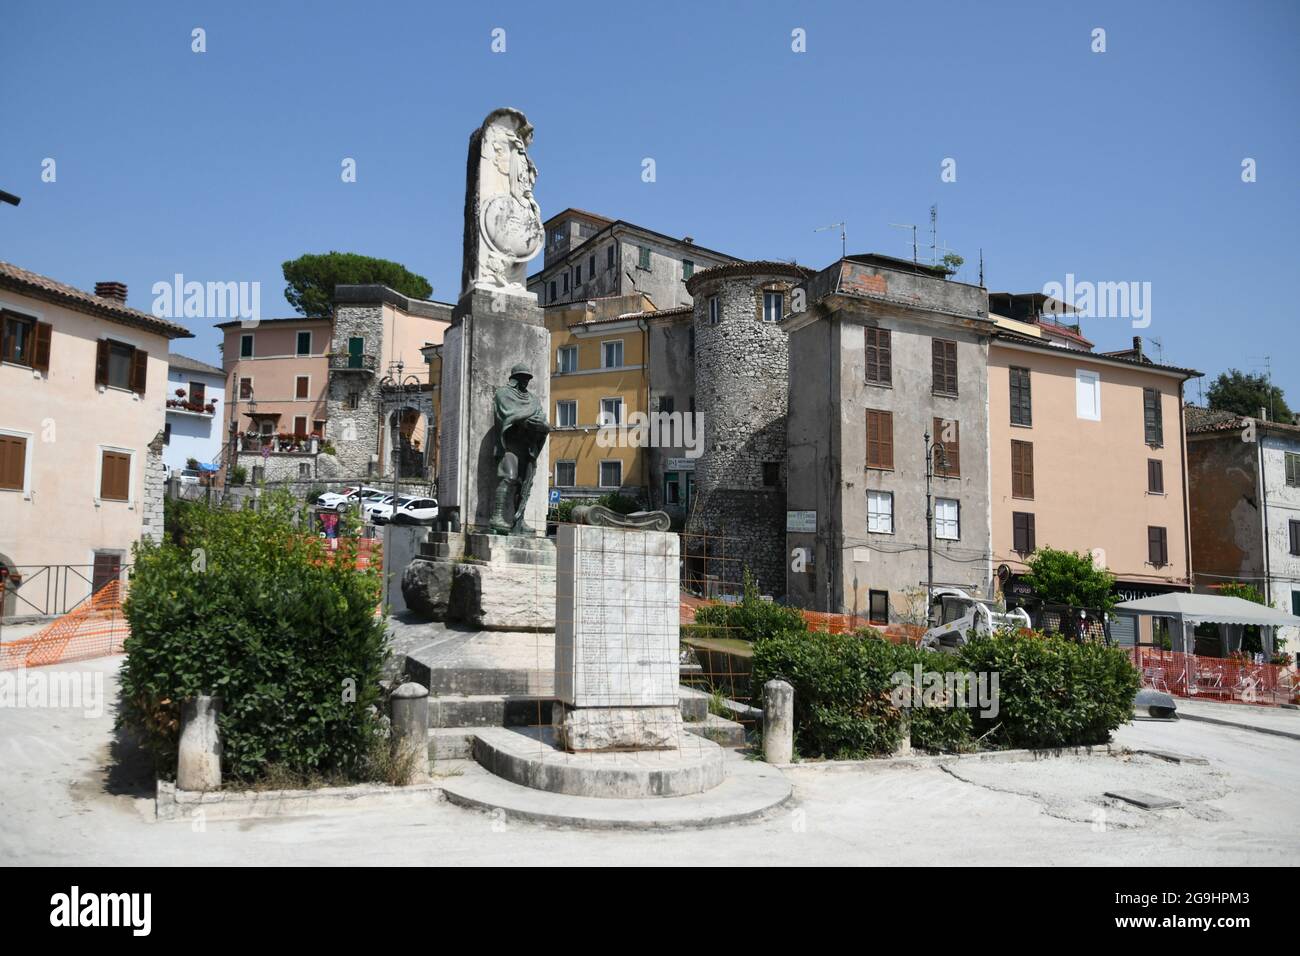 Carpineto romano, Italy, July 24, 2021. A small square in the medieval quarter of a medieval town in the Lazio region. Stock Photo